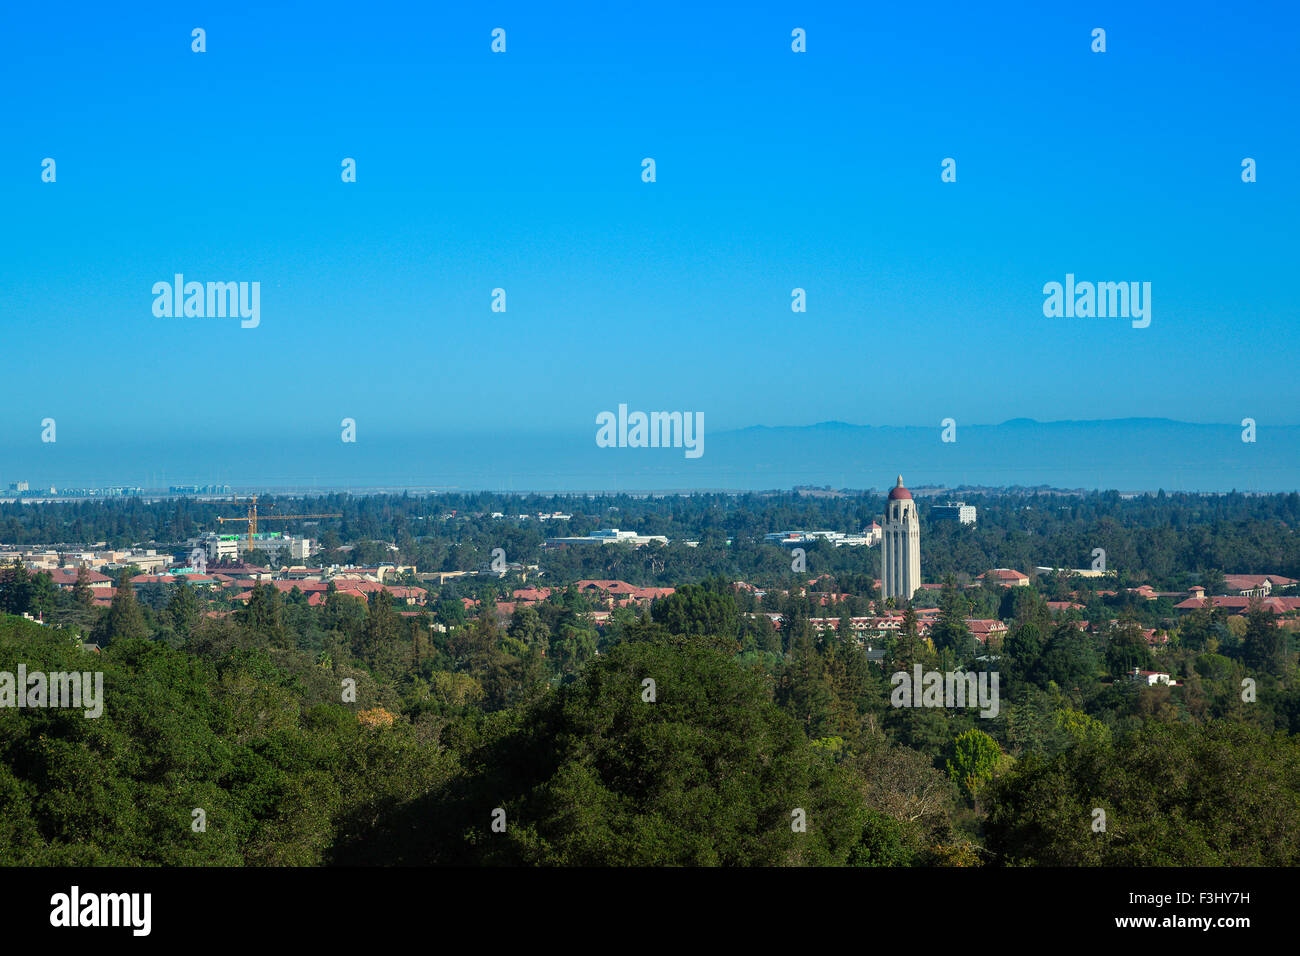 Aerial view of Stanford university, California, USA Stock Photo